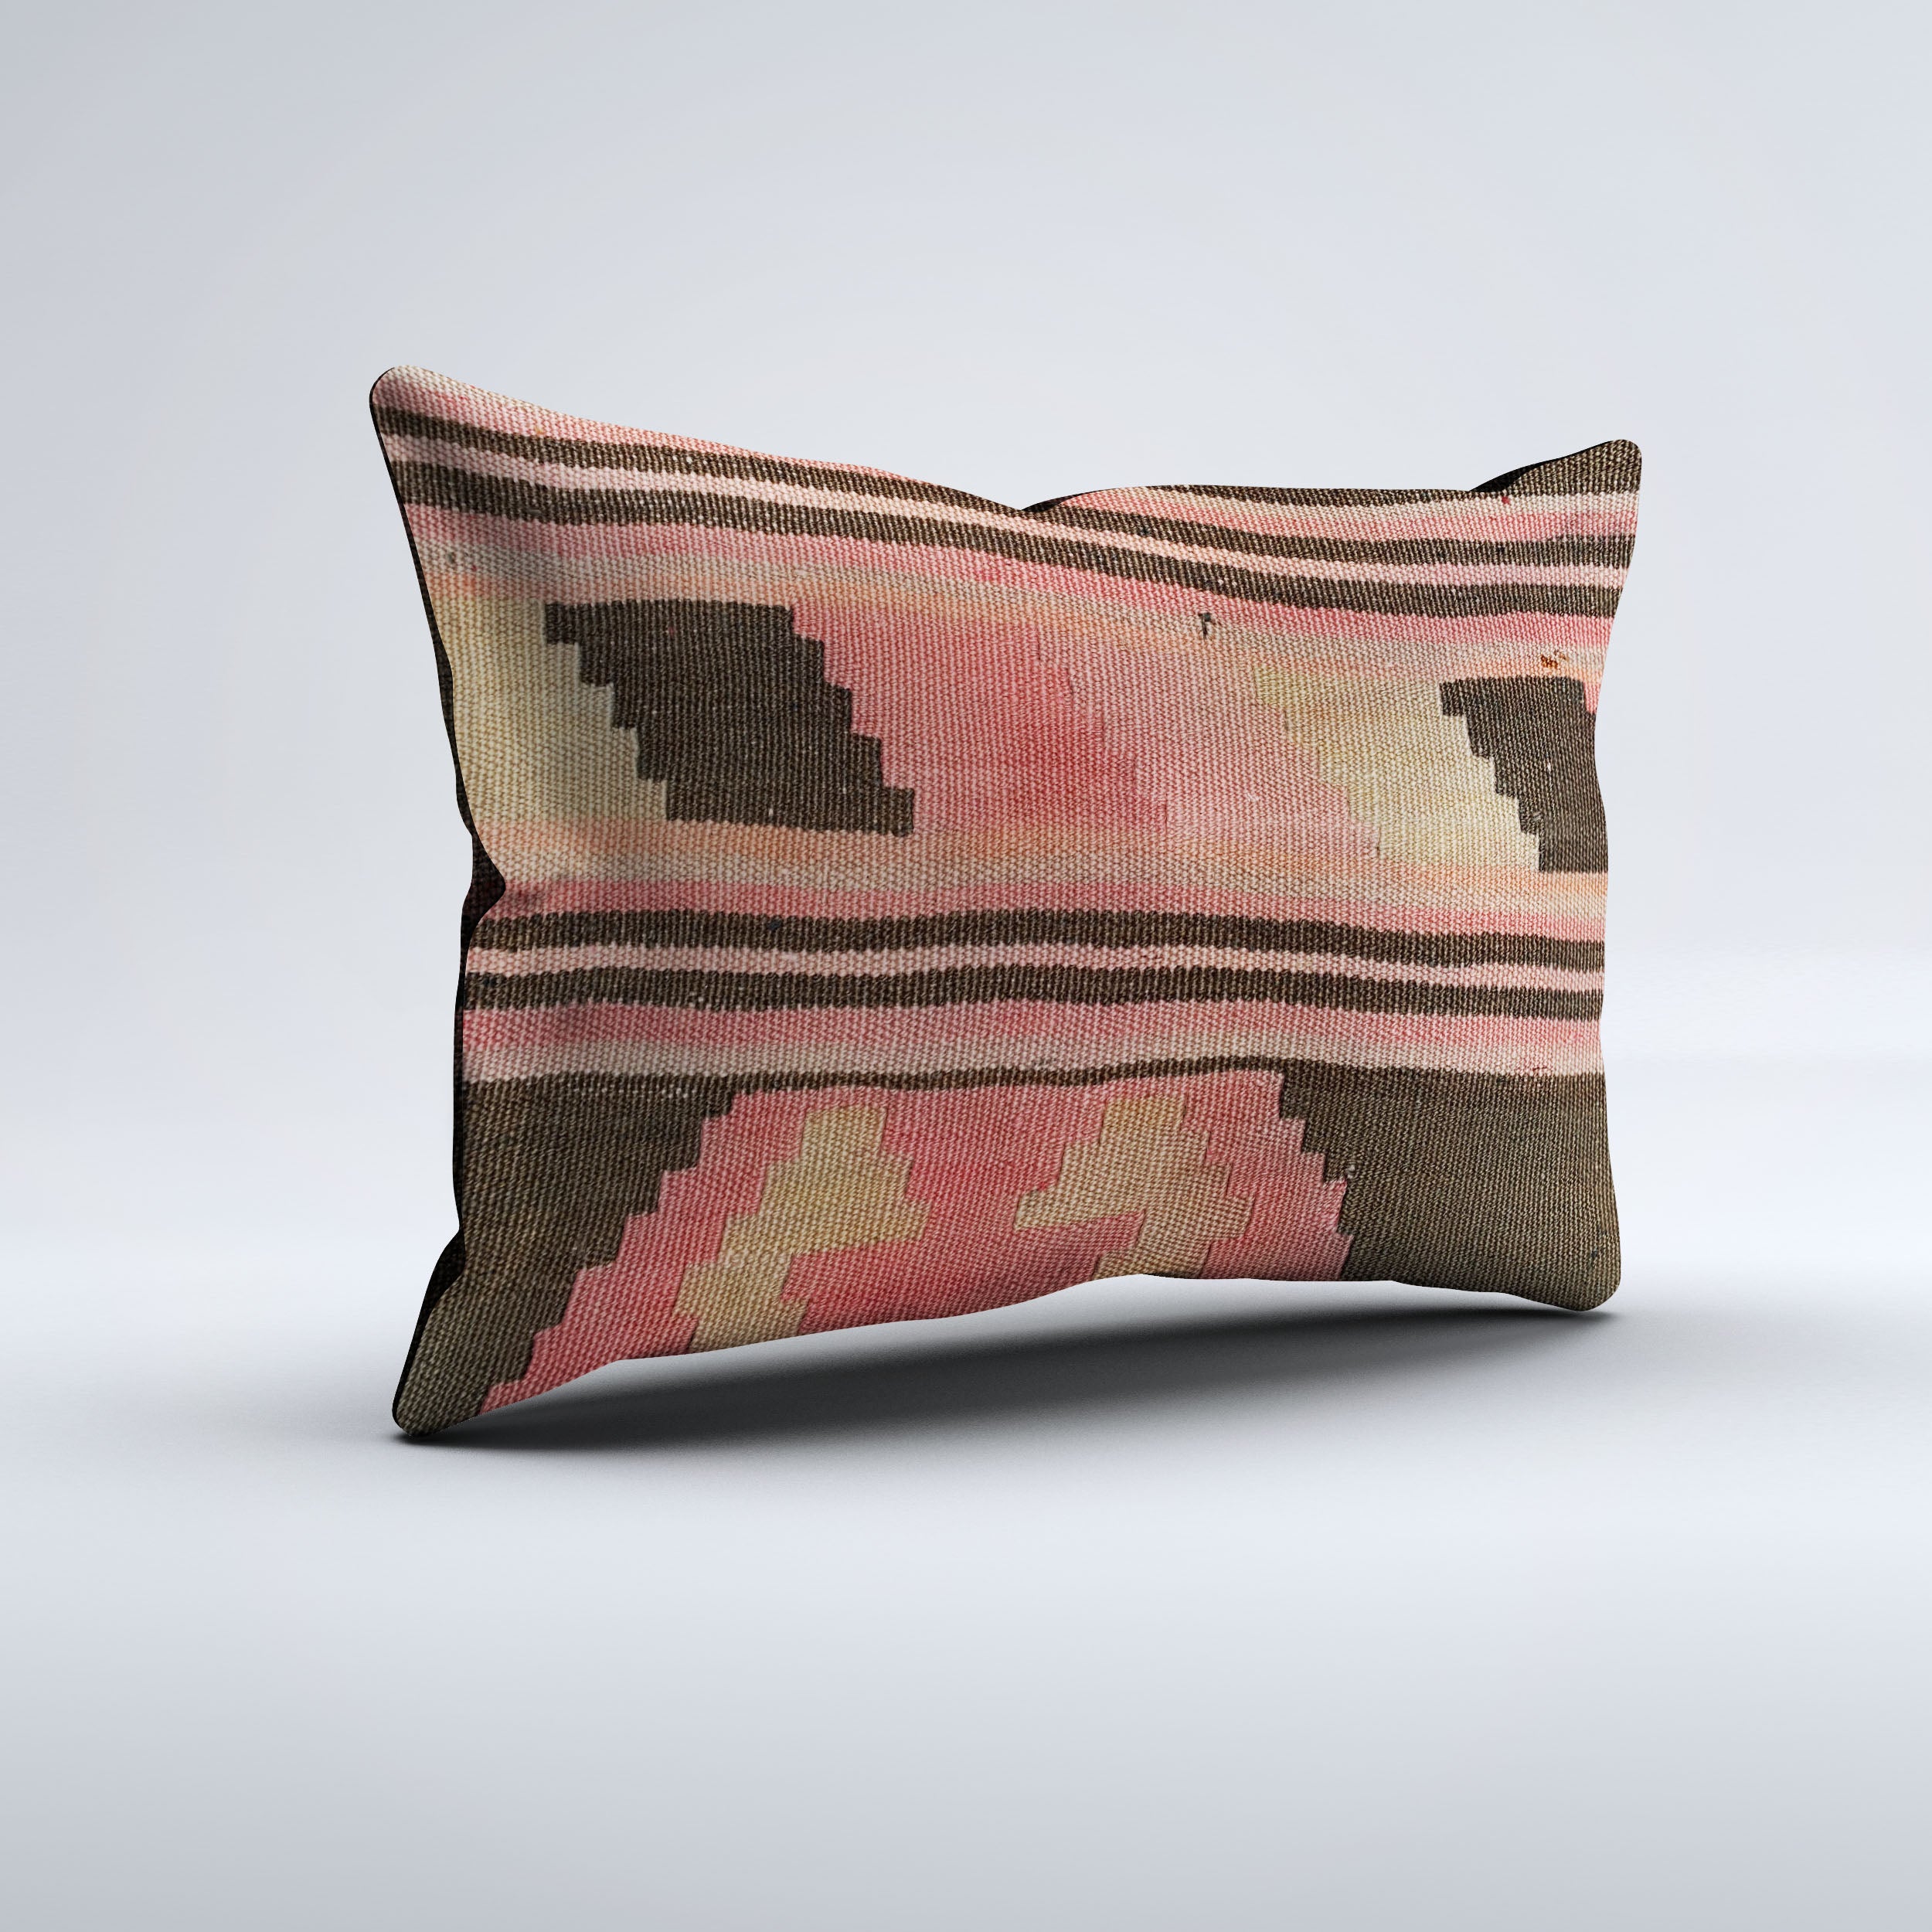 Vintage Turkish Kilim Cushion Cover 60x40 cm Square Wool Kelim Pillowcase 64796